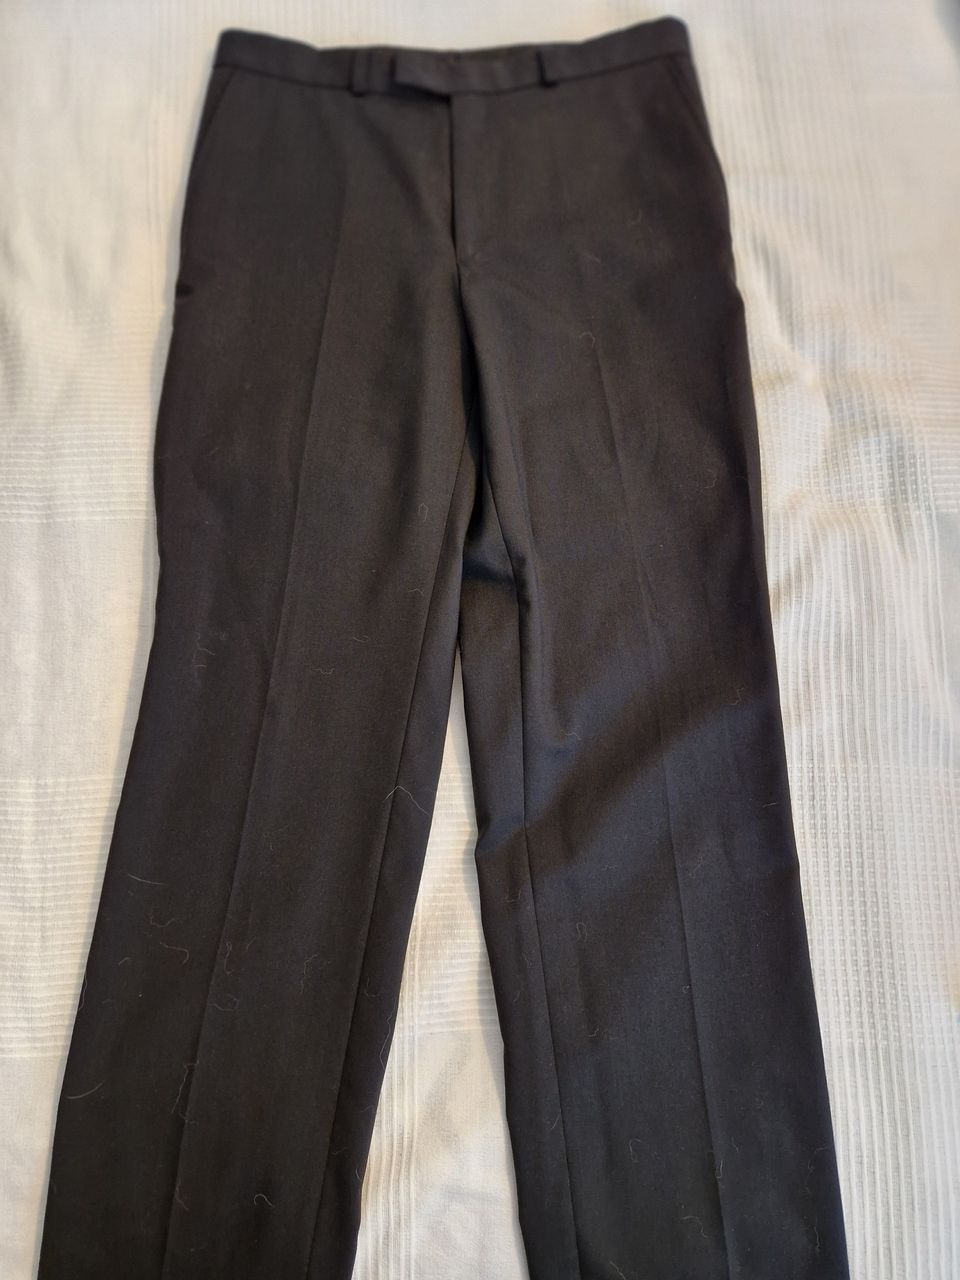 Mustat puvun housut miesten s/m kokoinen